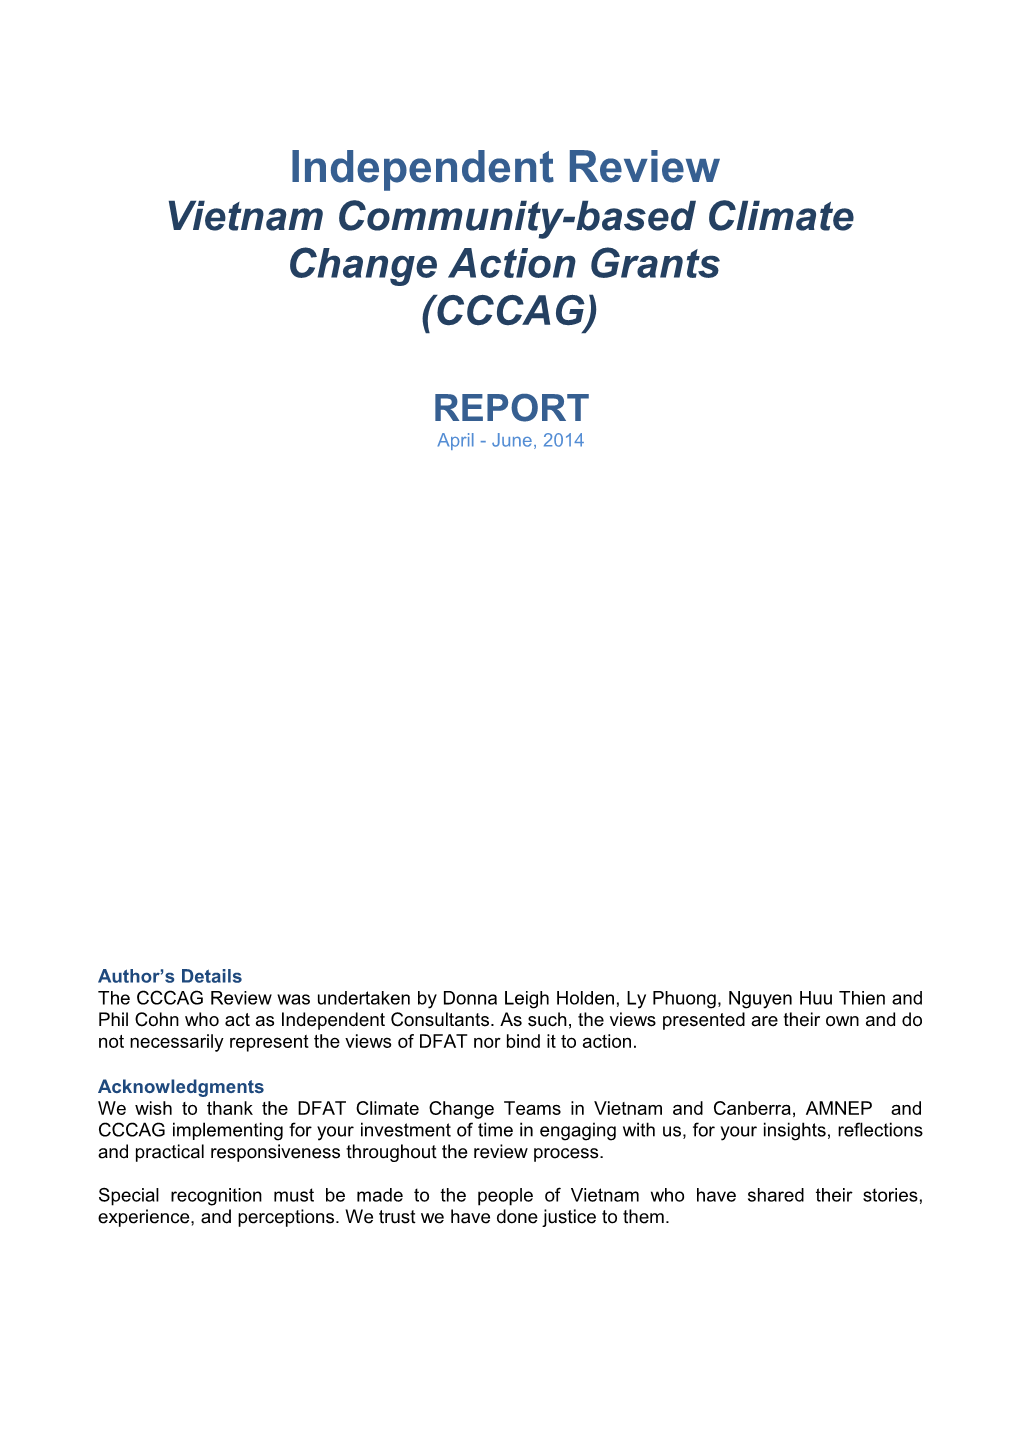 Vietnam Community-Based Climate Change Action Grants